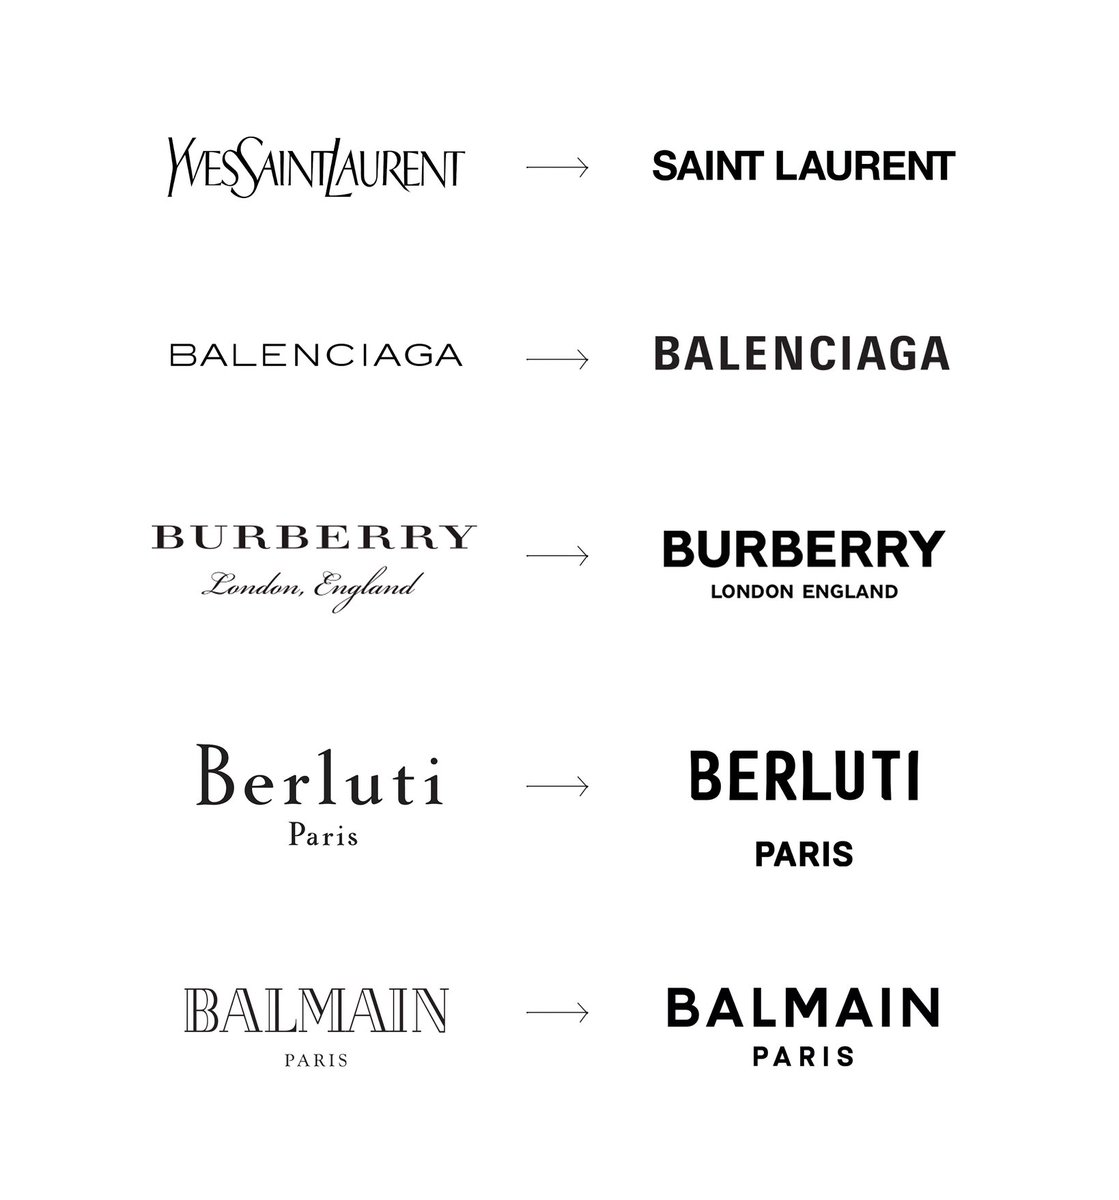 burberry similar brands